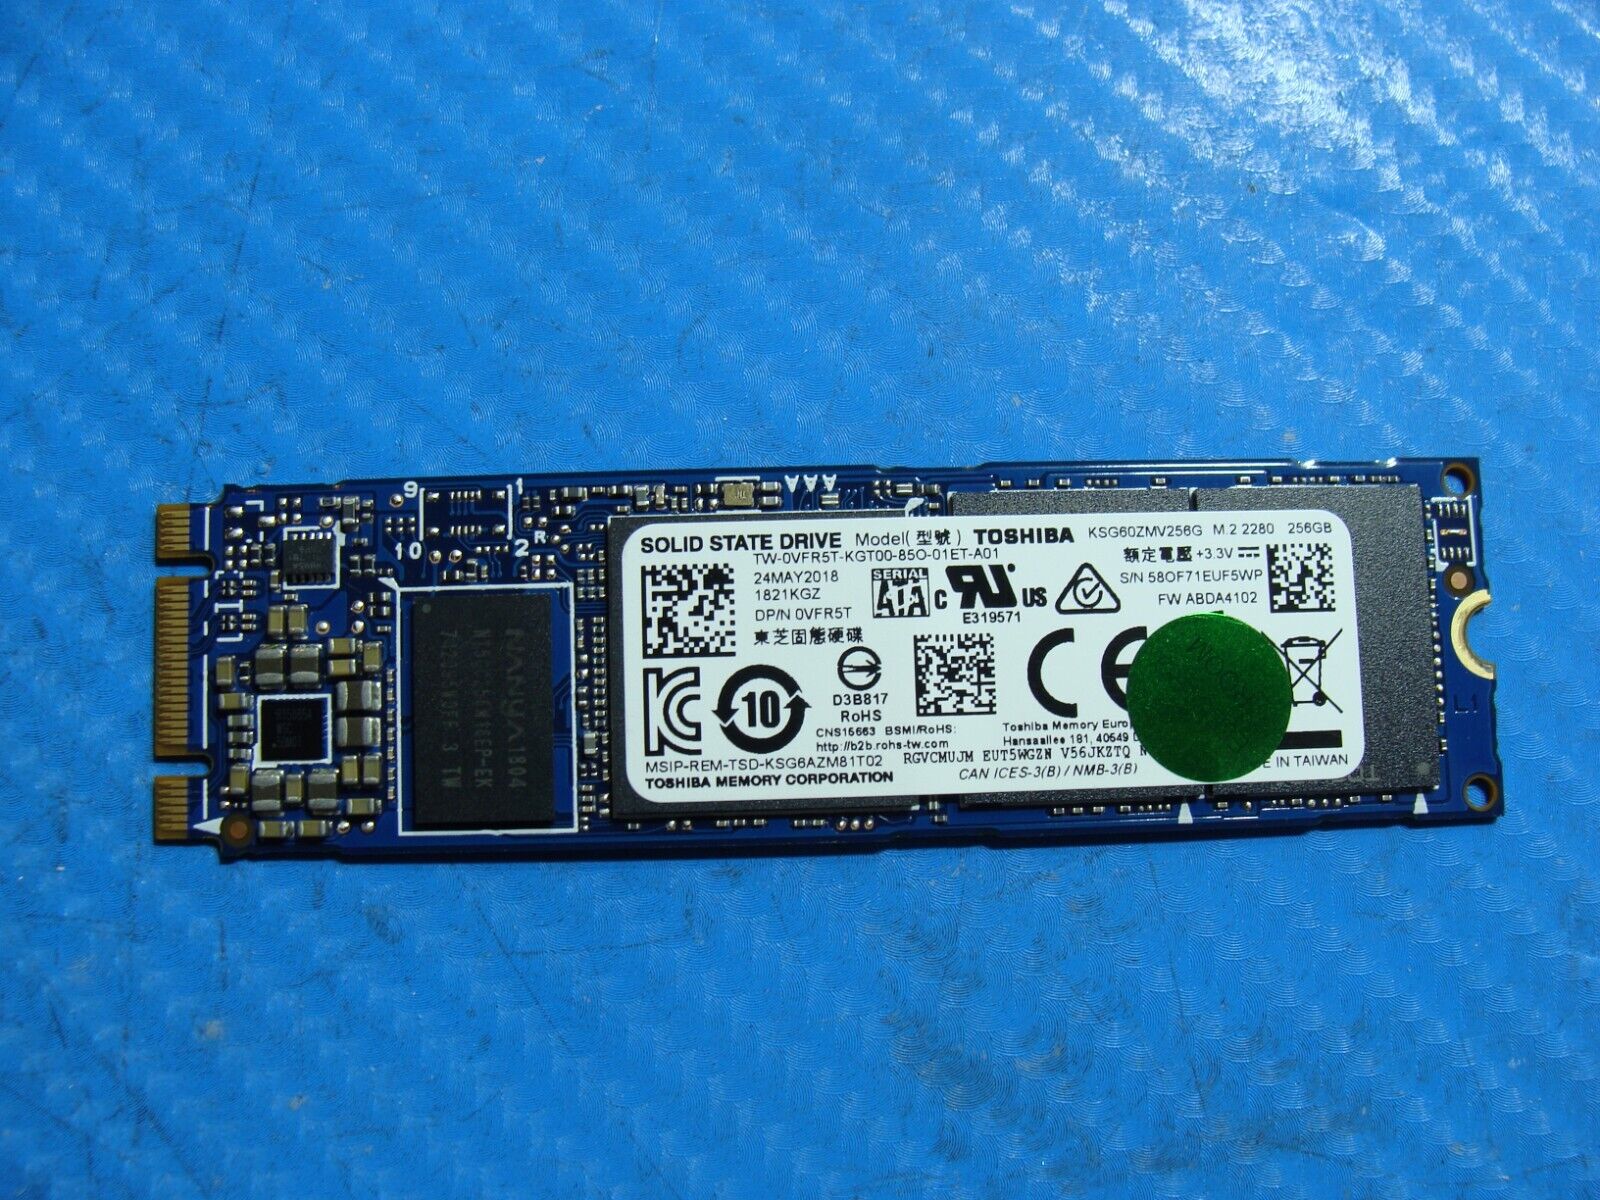 Dell 3590 Toshiba 256GB Sata M.2 SSD Solid State Drive VFR5T KSG60ZMV256G